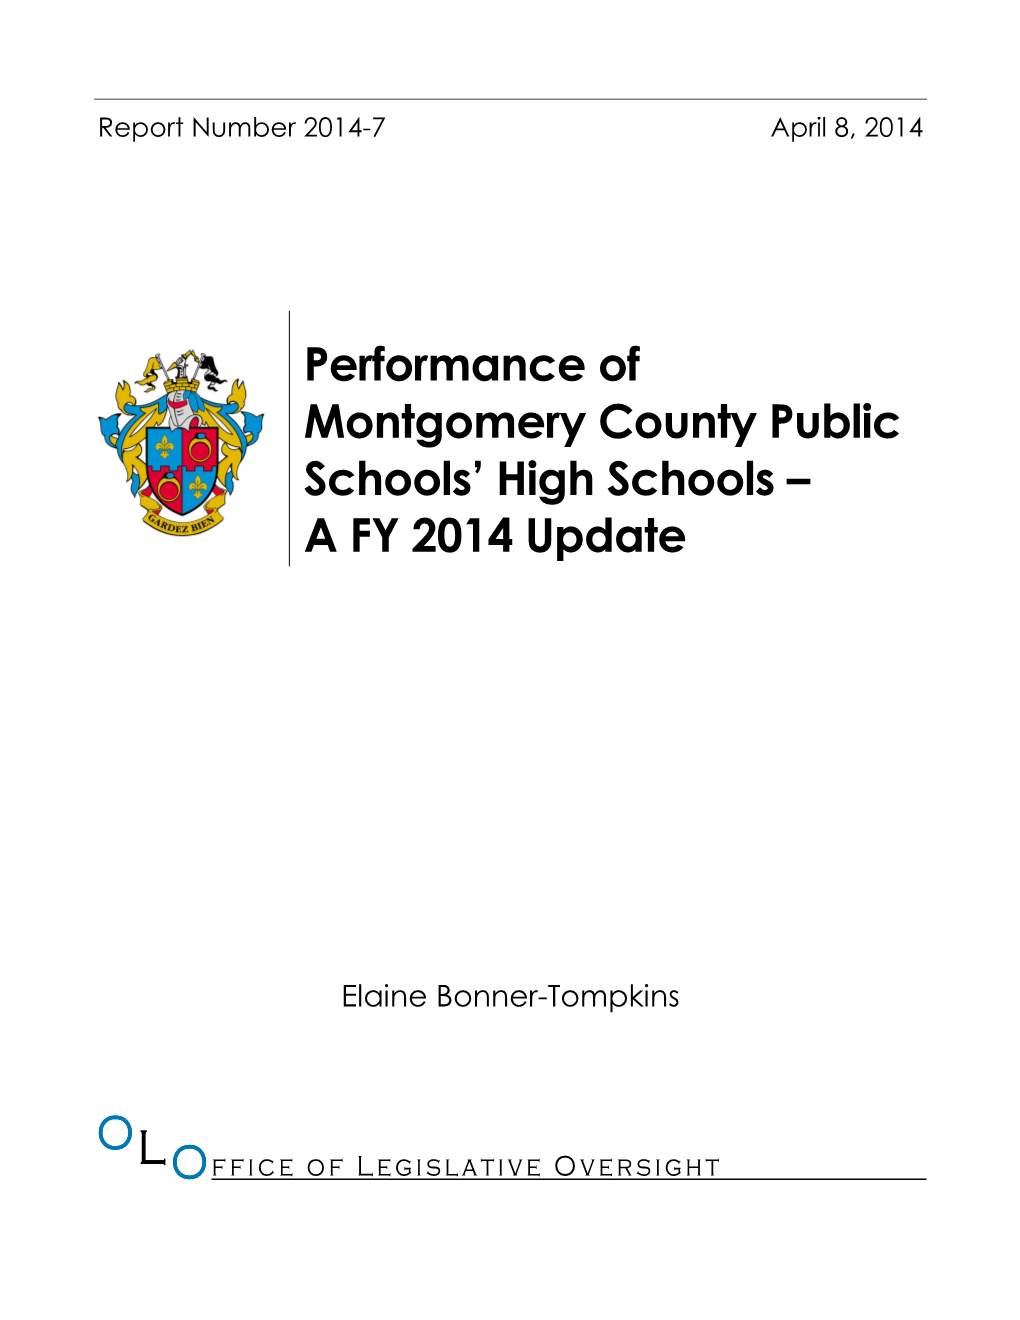 Performance of Montgomery County Public Schools' High Schools – A